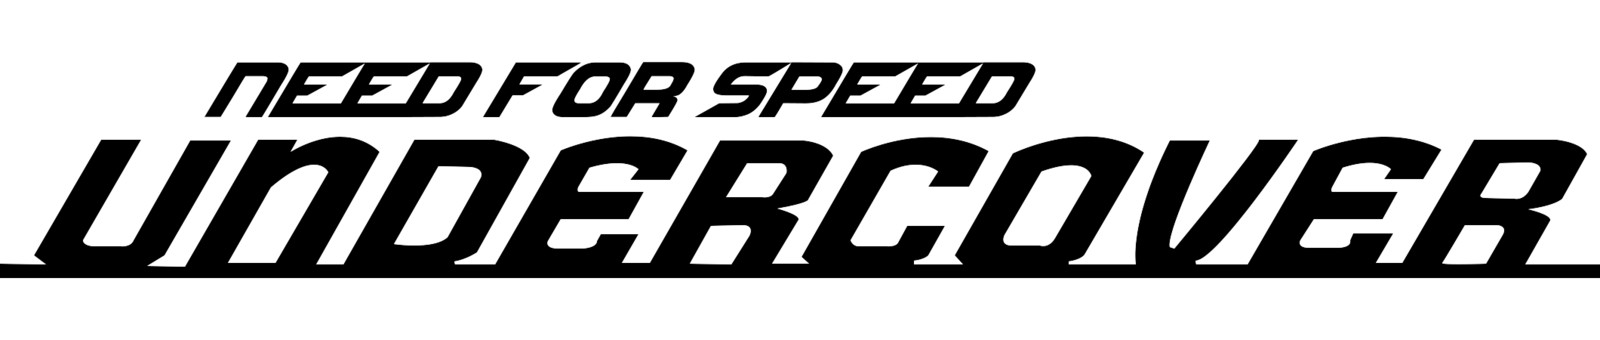 Need for Speed: Undercover - Logotype (Original)